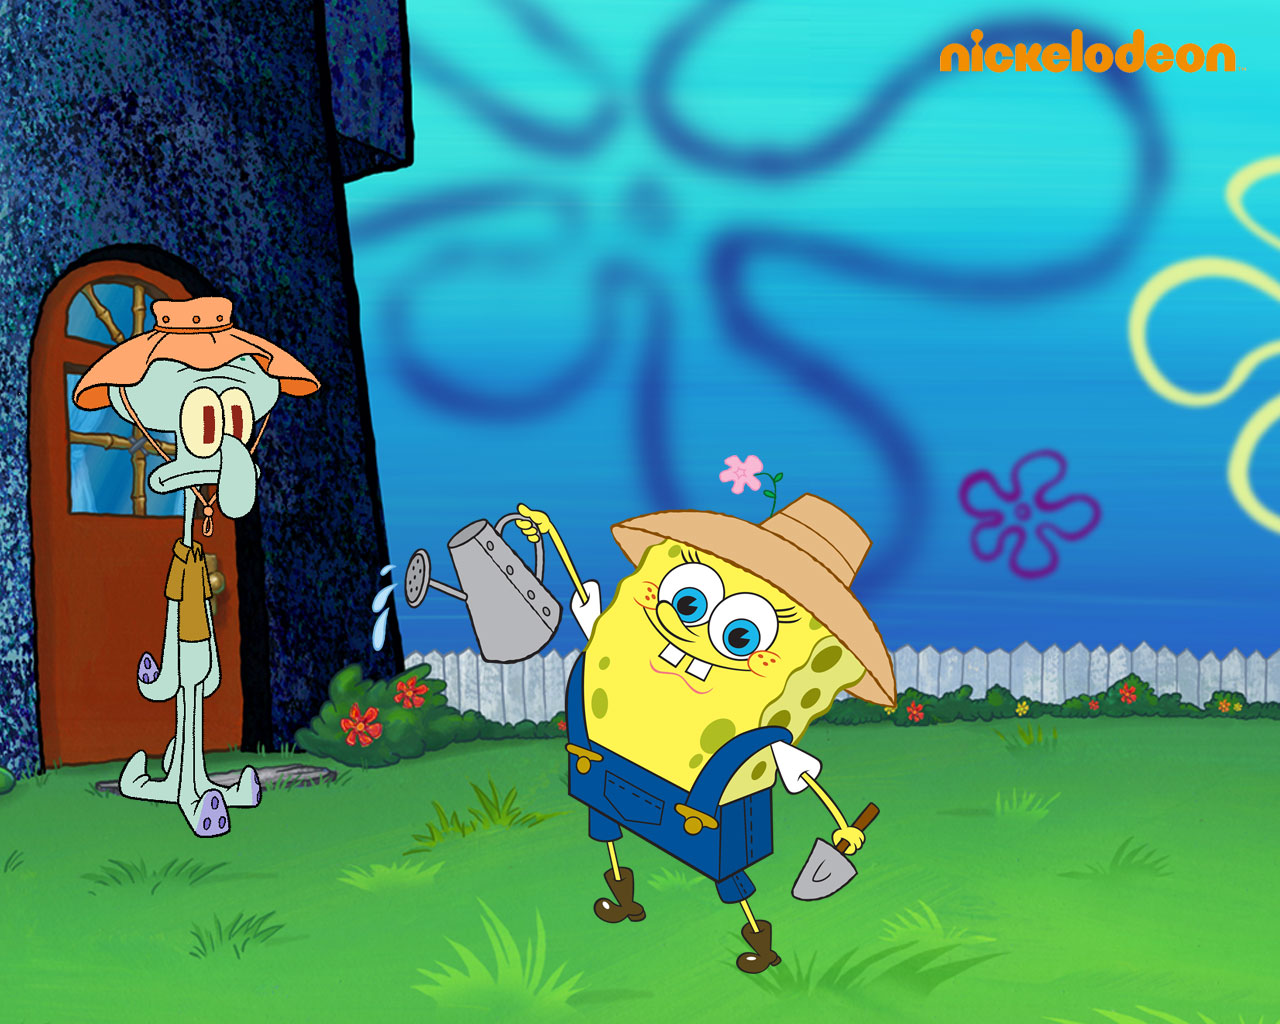 Spongebob & Squidward - Spongebob Squarepants Wallpaper (31281673) - Fanpop